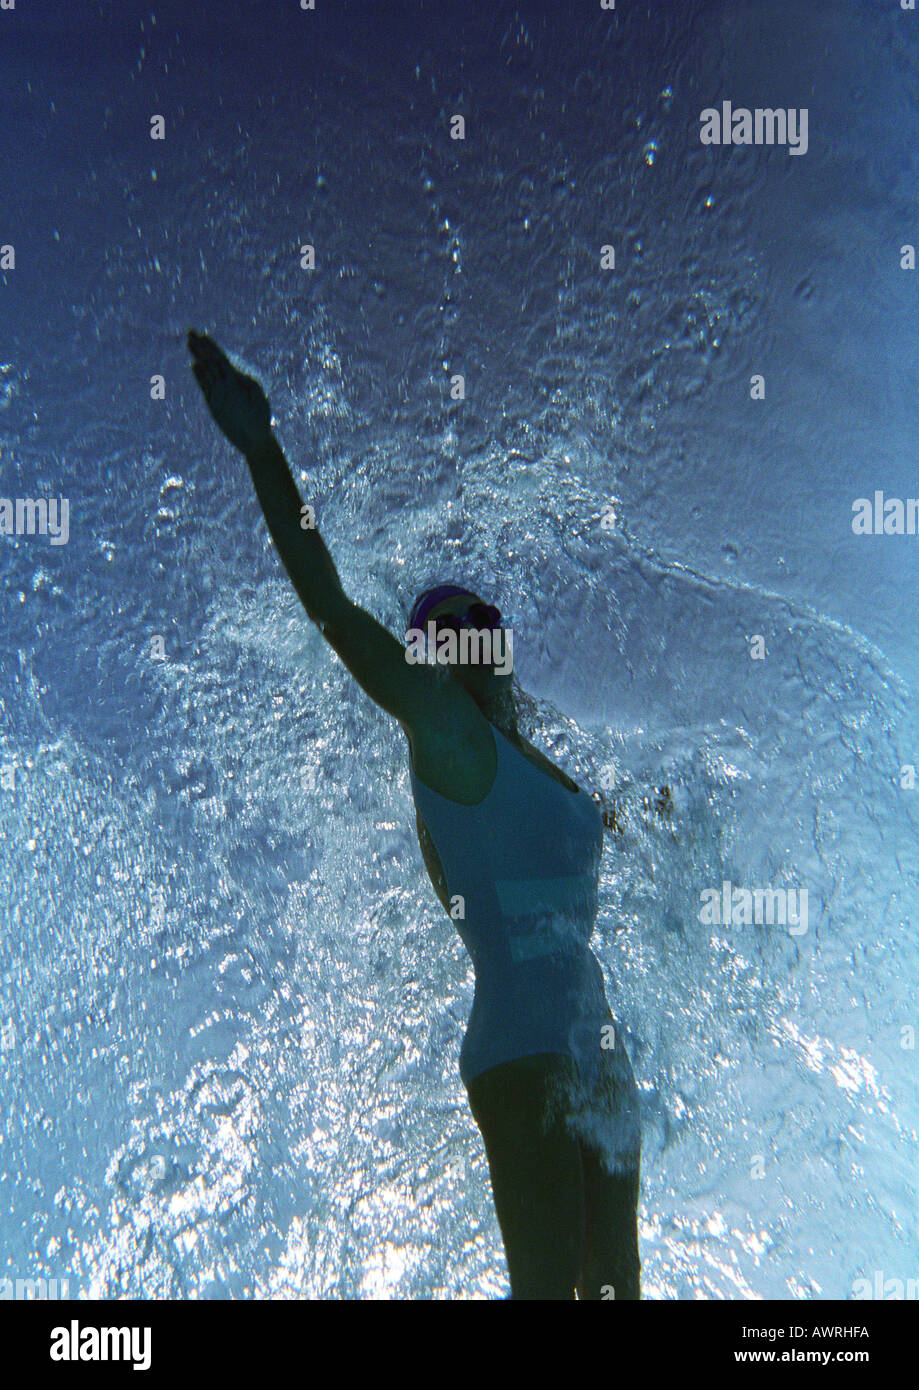 Young woman underwater, underwater view. Stock Photo